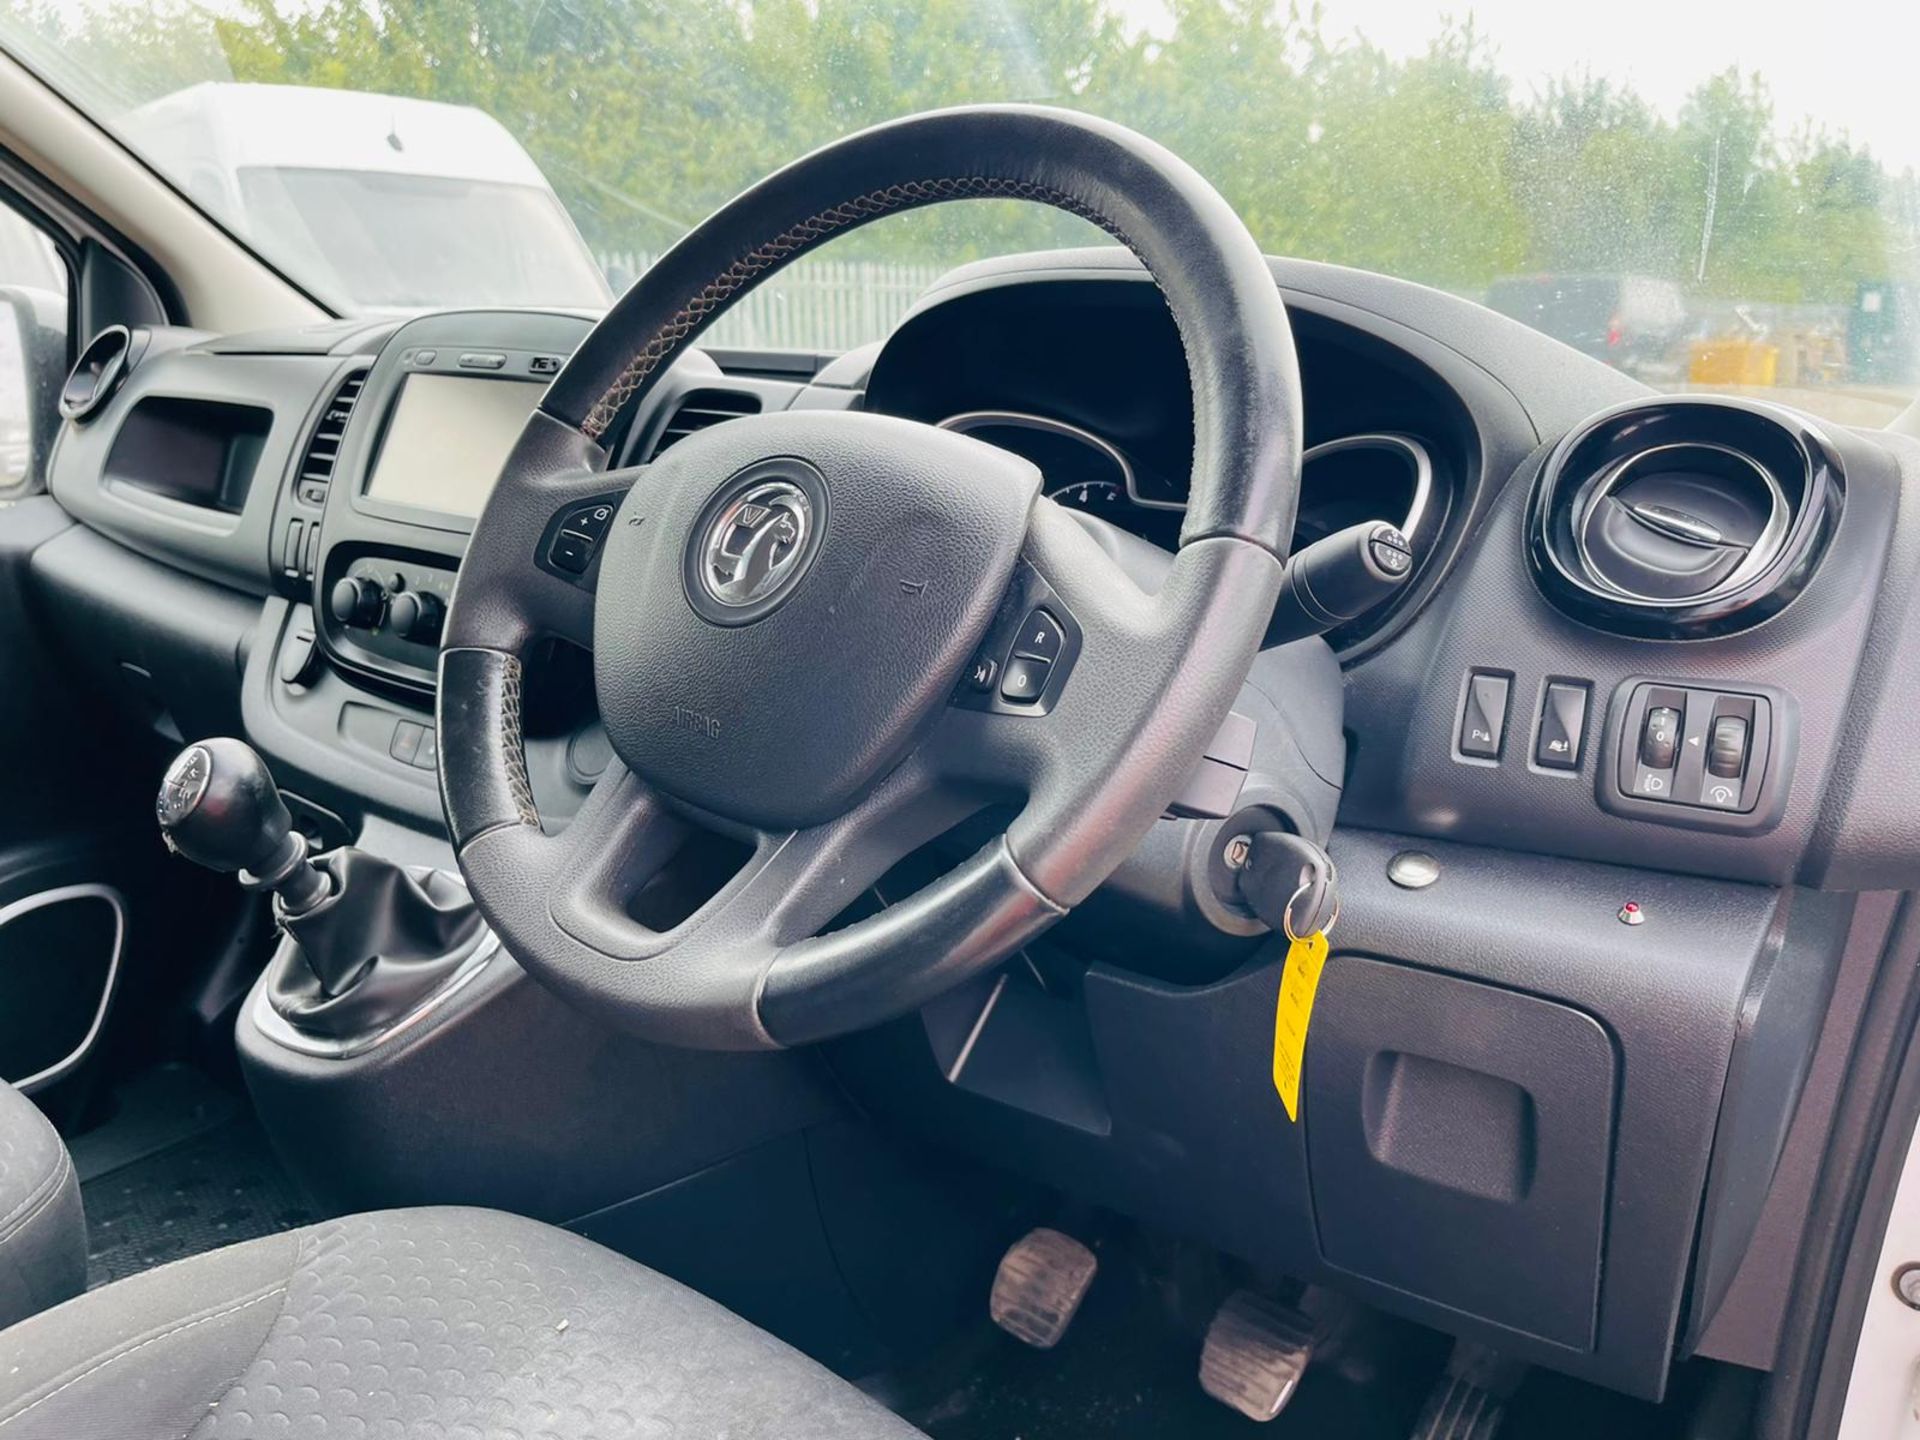 Vauxhall Vivaro 1.6 CDTI 125 Blueinjection Sportive L1 H1 2017 '66 Reg' - Euro 6 - ULEZ Compliant - Image 14 of 20